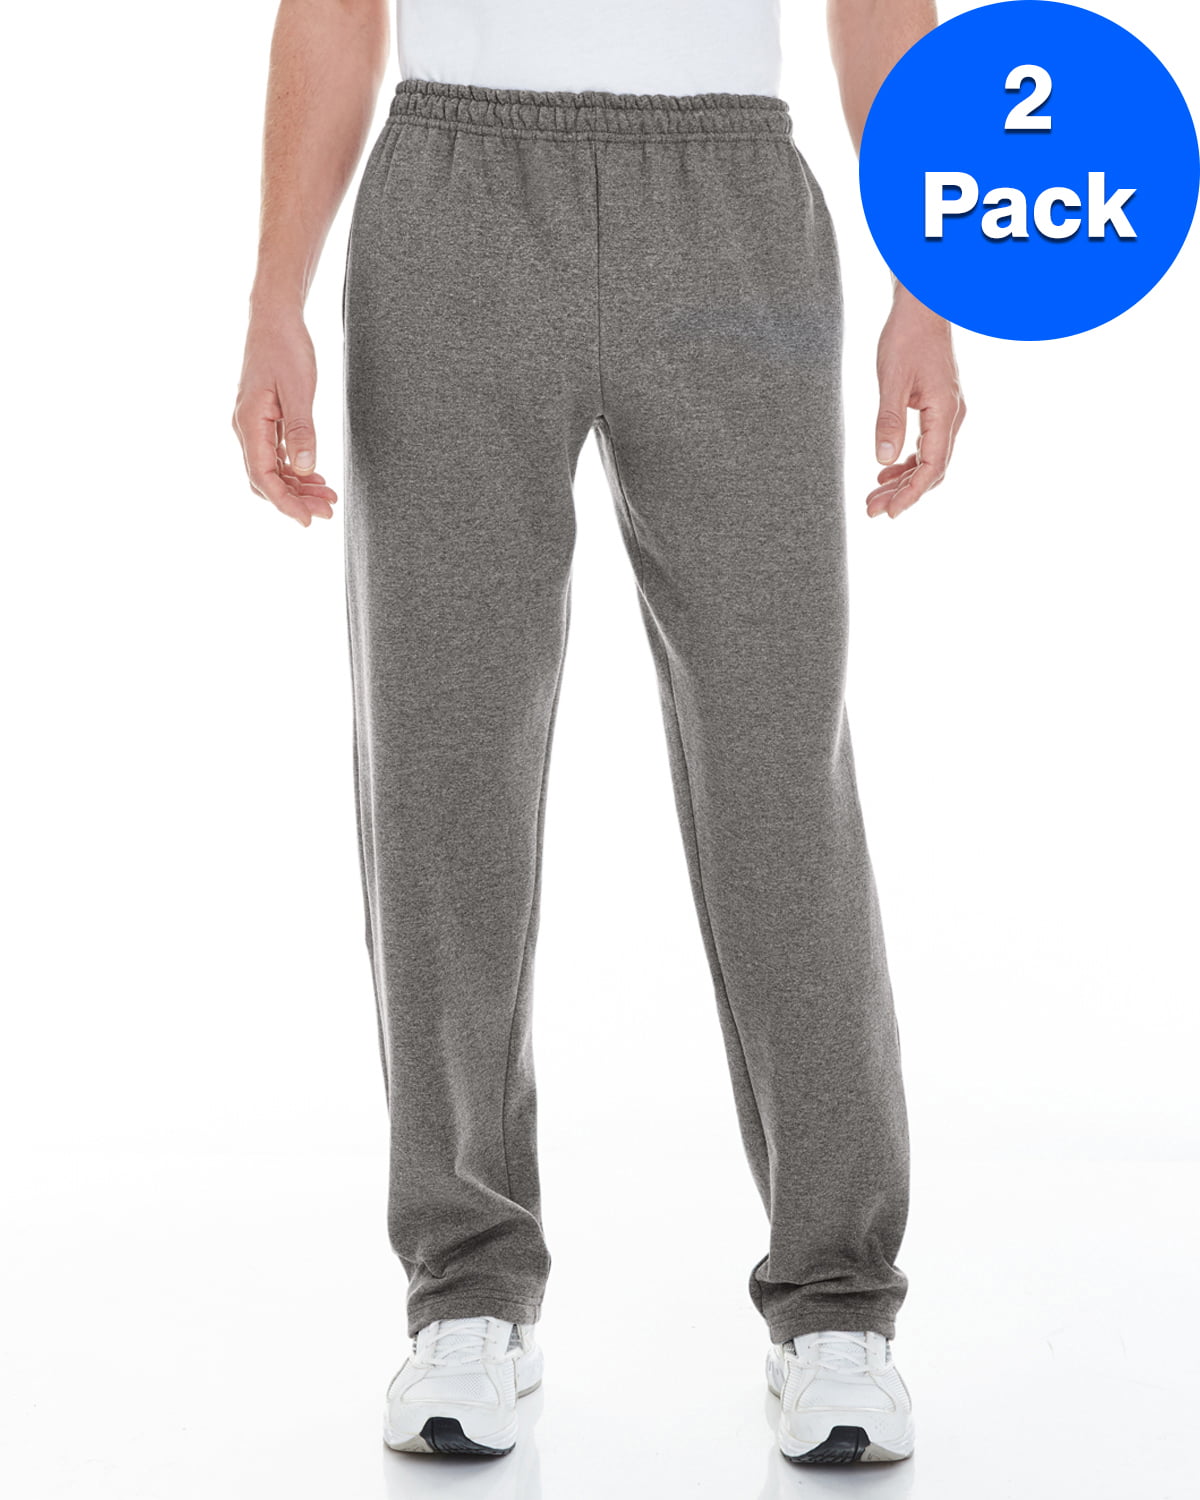 Mens 8 oz. Open-Bottom Sweatpants with Pockets 2 Pack - Walmart.com